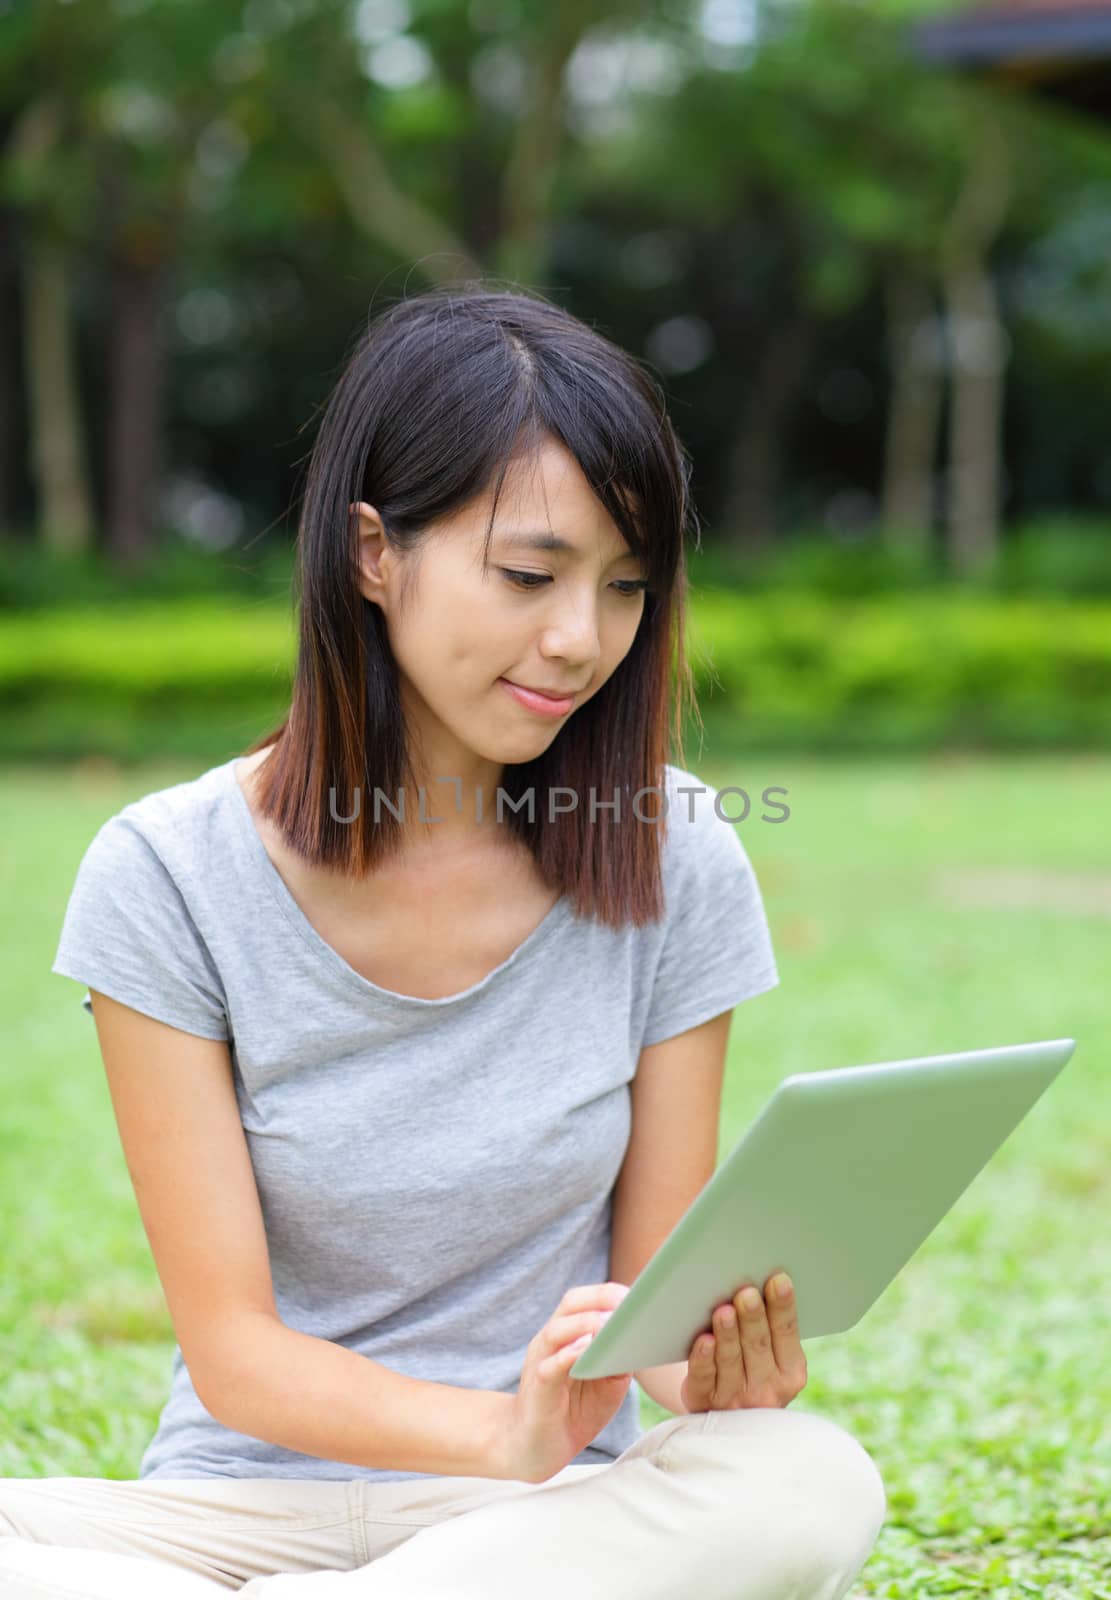 Asian woman looking at computer tablet by leungchopan